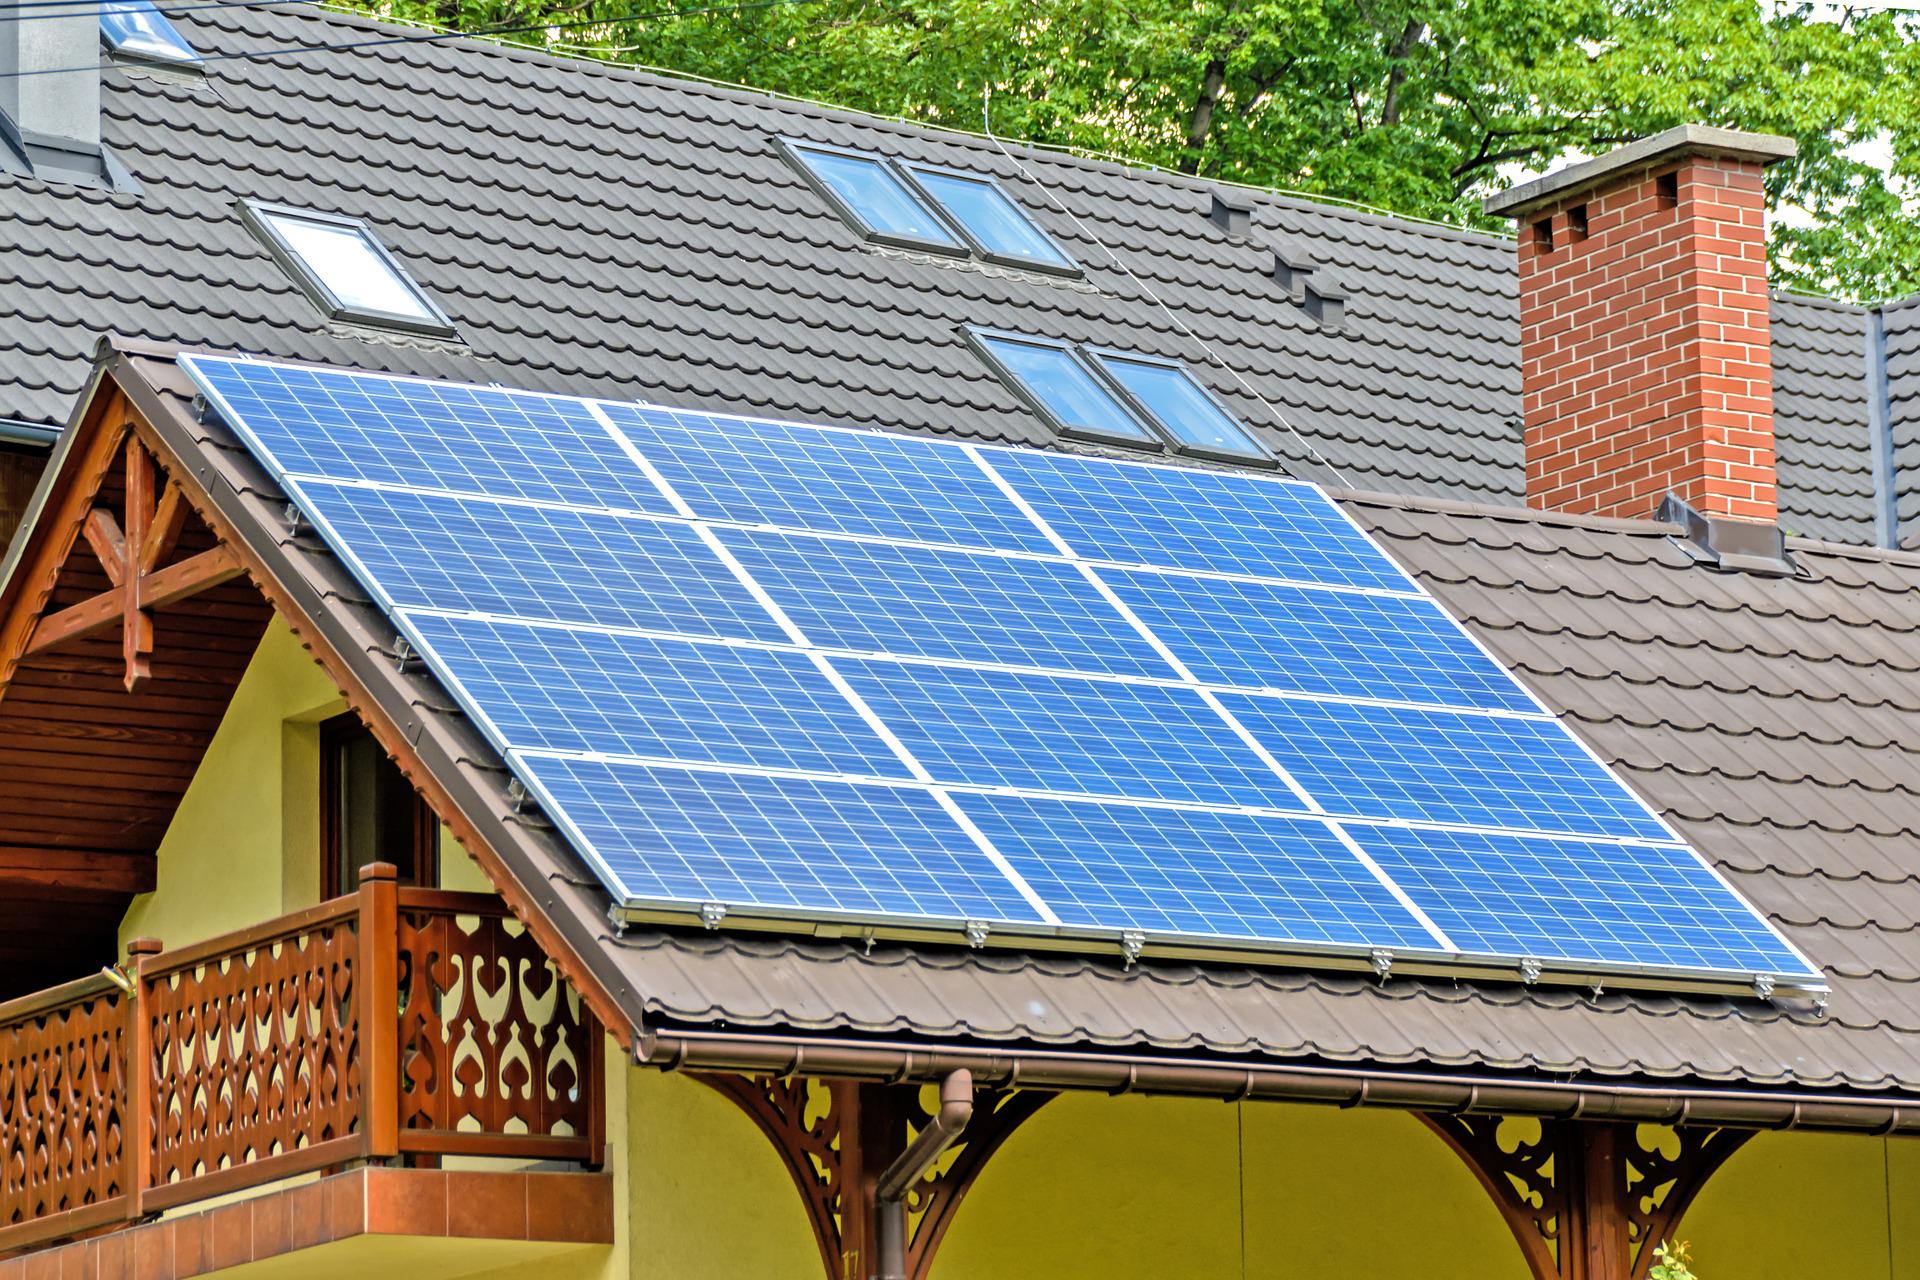 Subsidie voor barnevelders die willen investeren in thuisbatterij om zonne-energie op te slaan